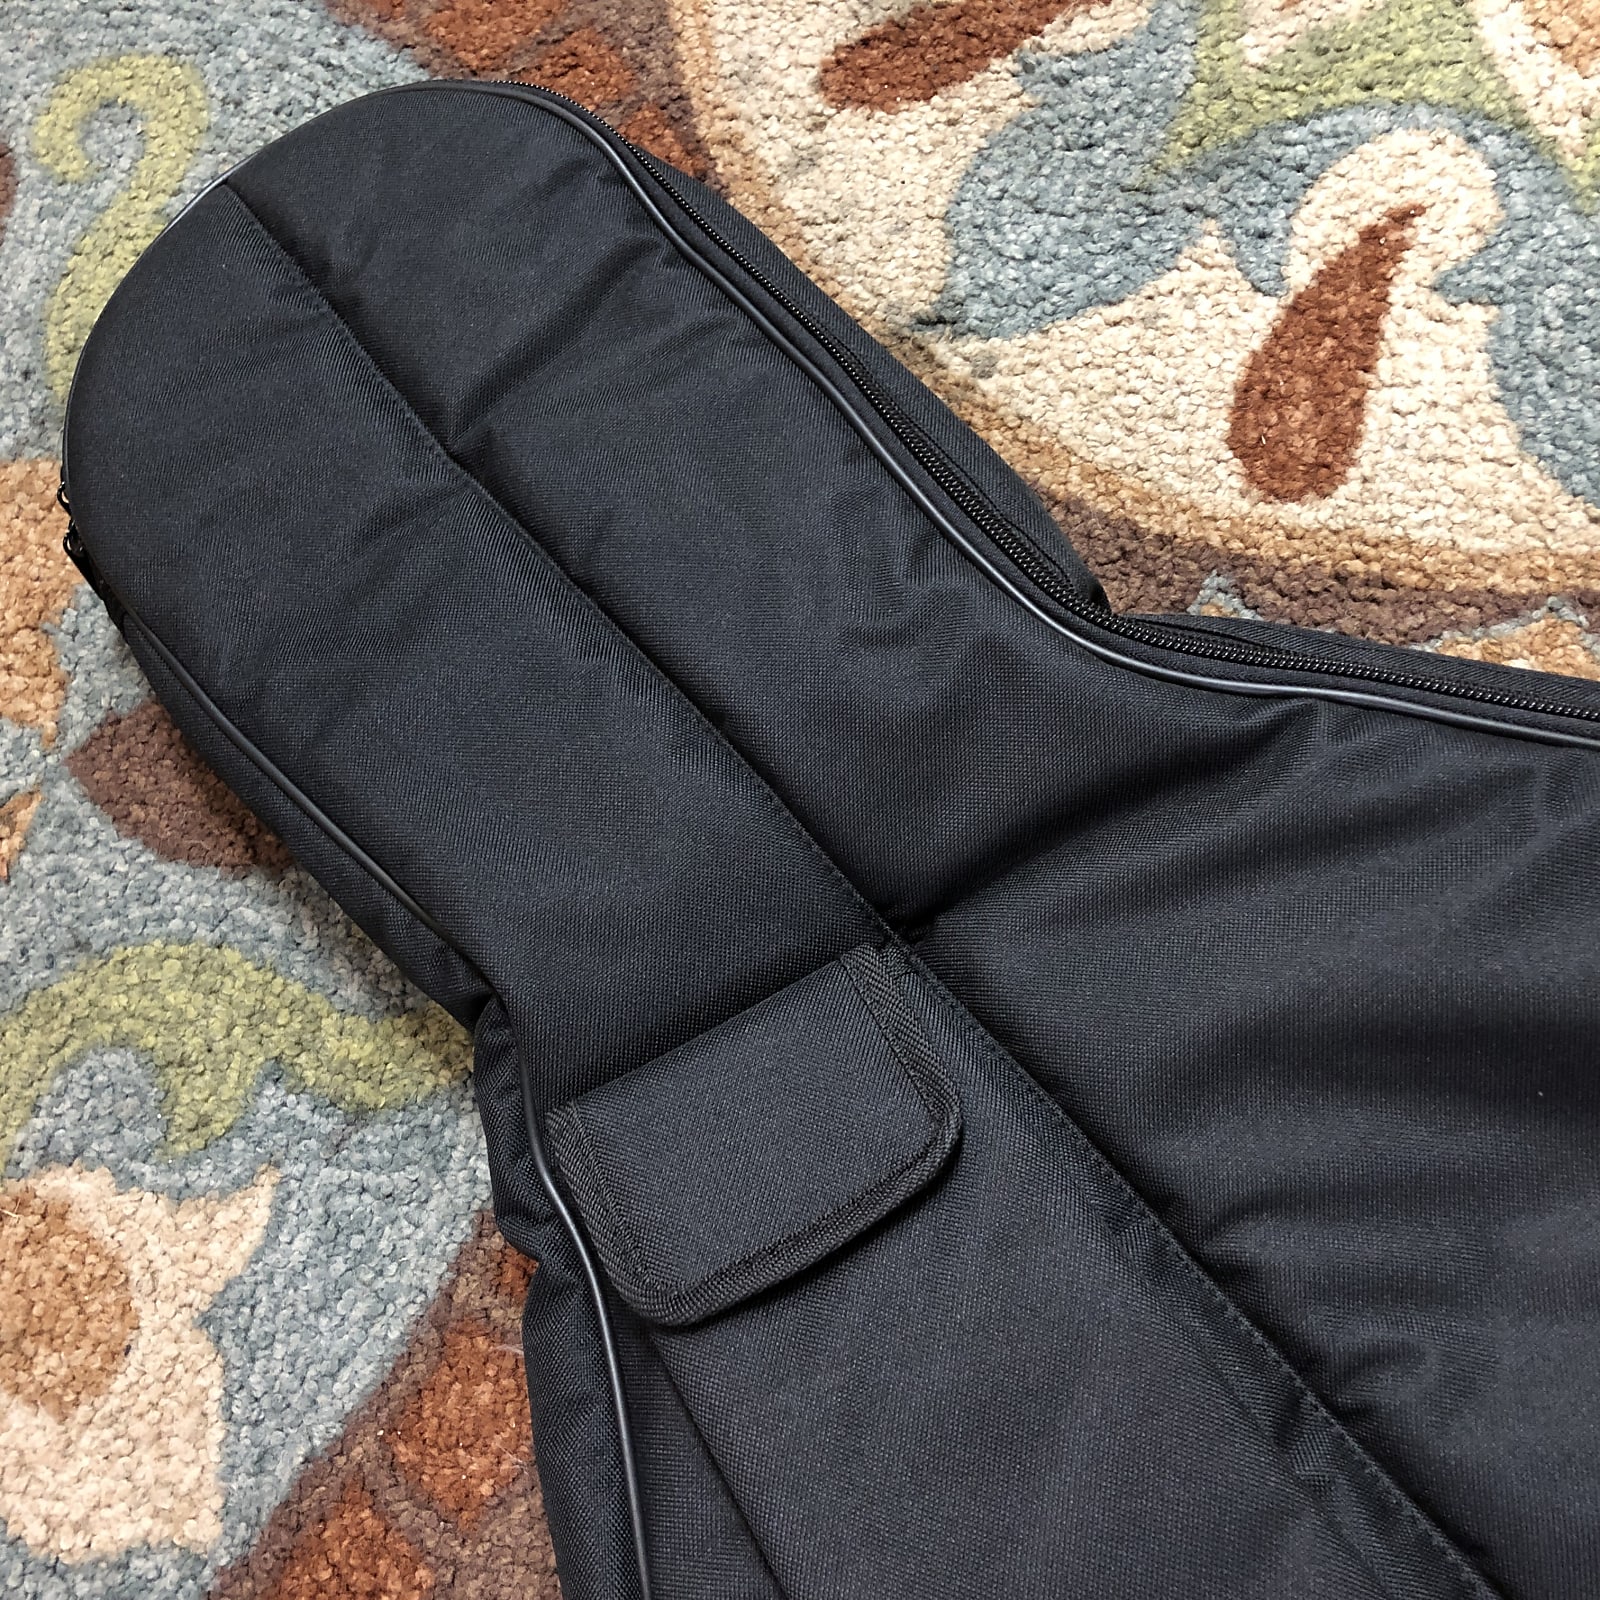 CNB CEB 600 Heavy Duty 3/4 Cello Gig Bag Black